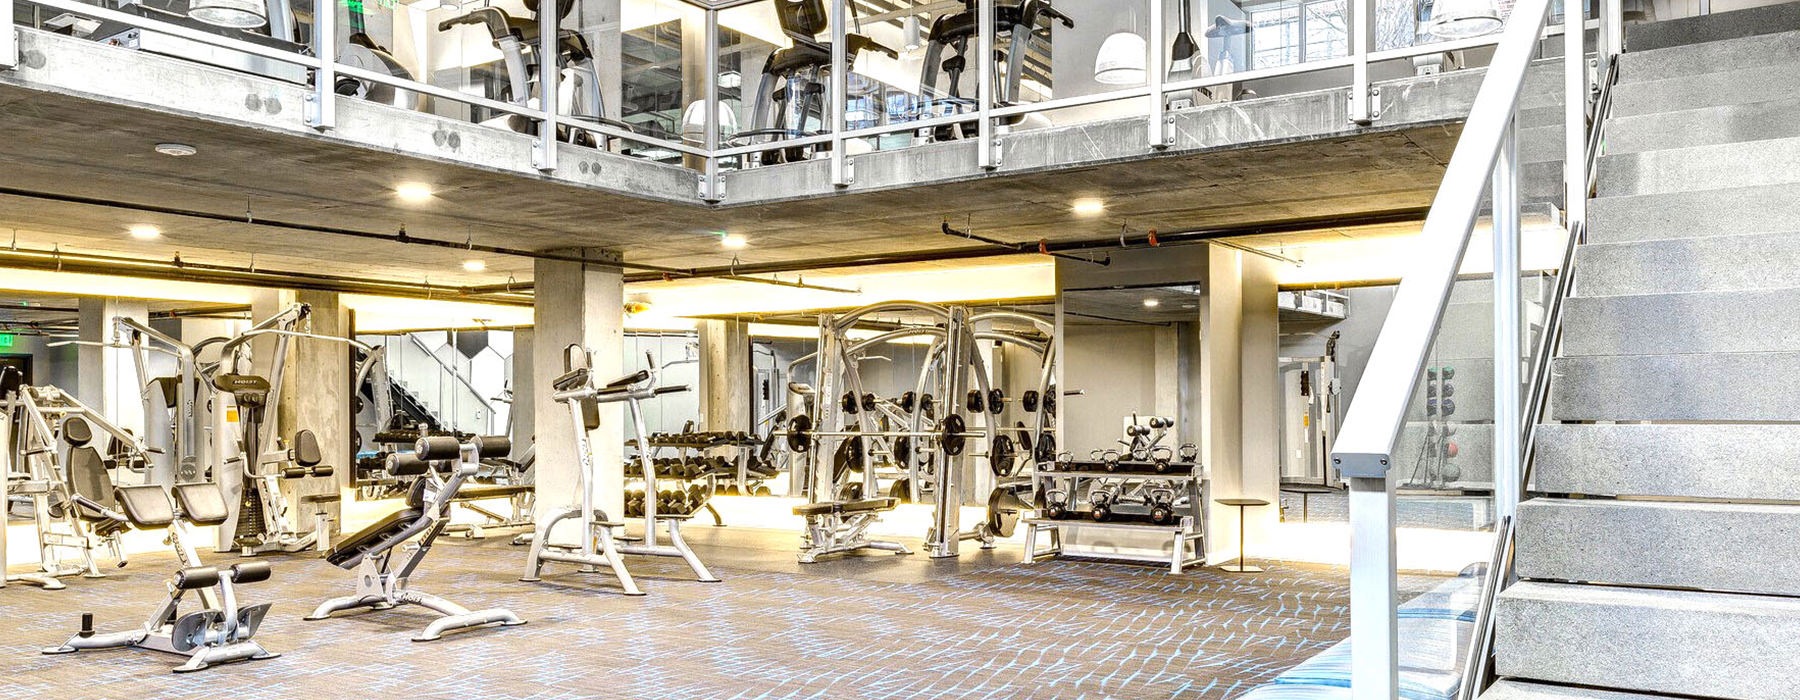 Large multi-level fitness center 